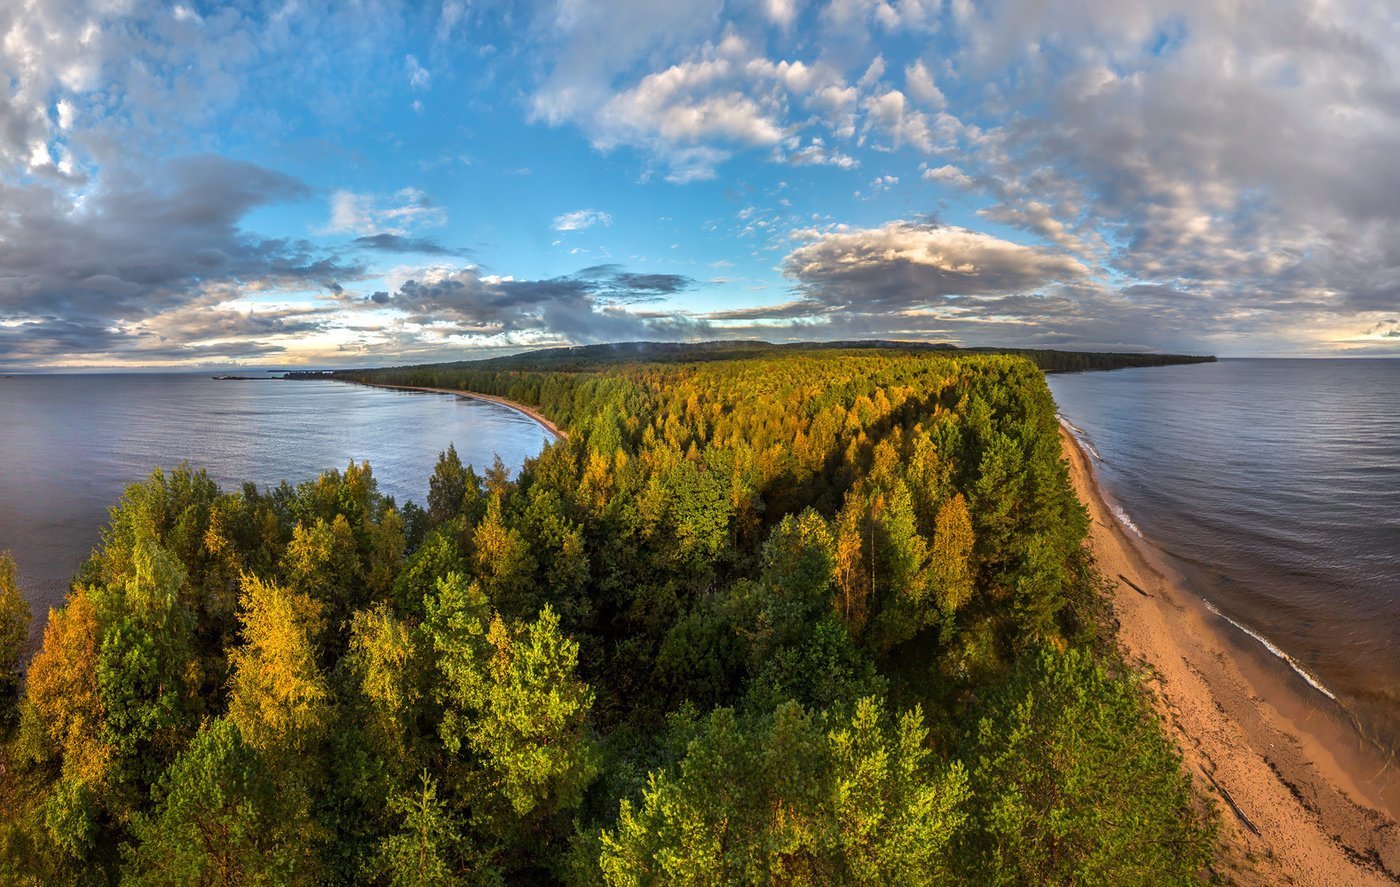 Оне озеро онежское. Озеро Онега Карелия. Берег Онежского озера Петрозаводск. Онега Онежское озеро. Природа Карелии Онежское озеро.